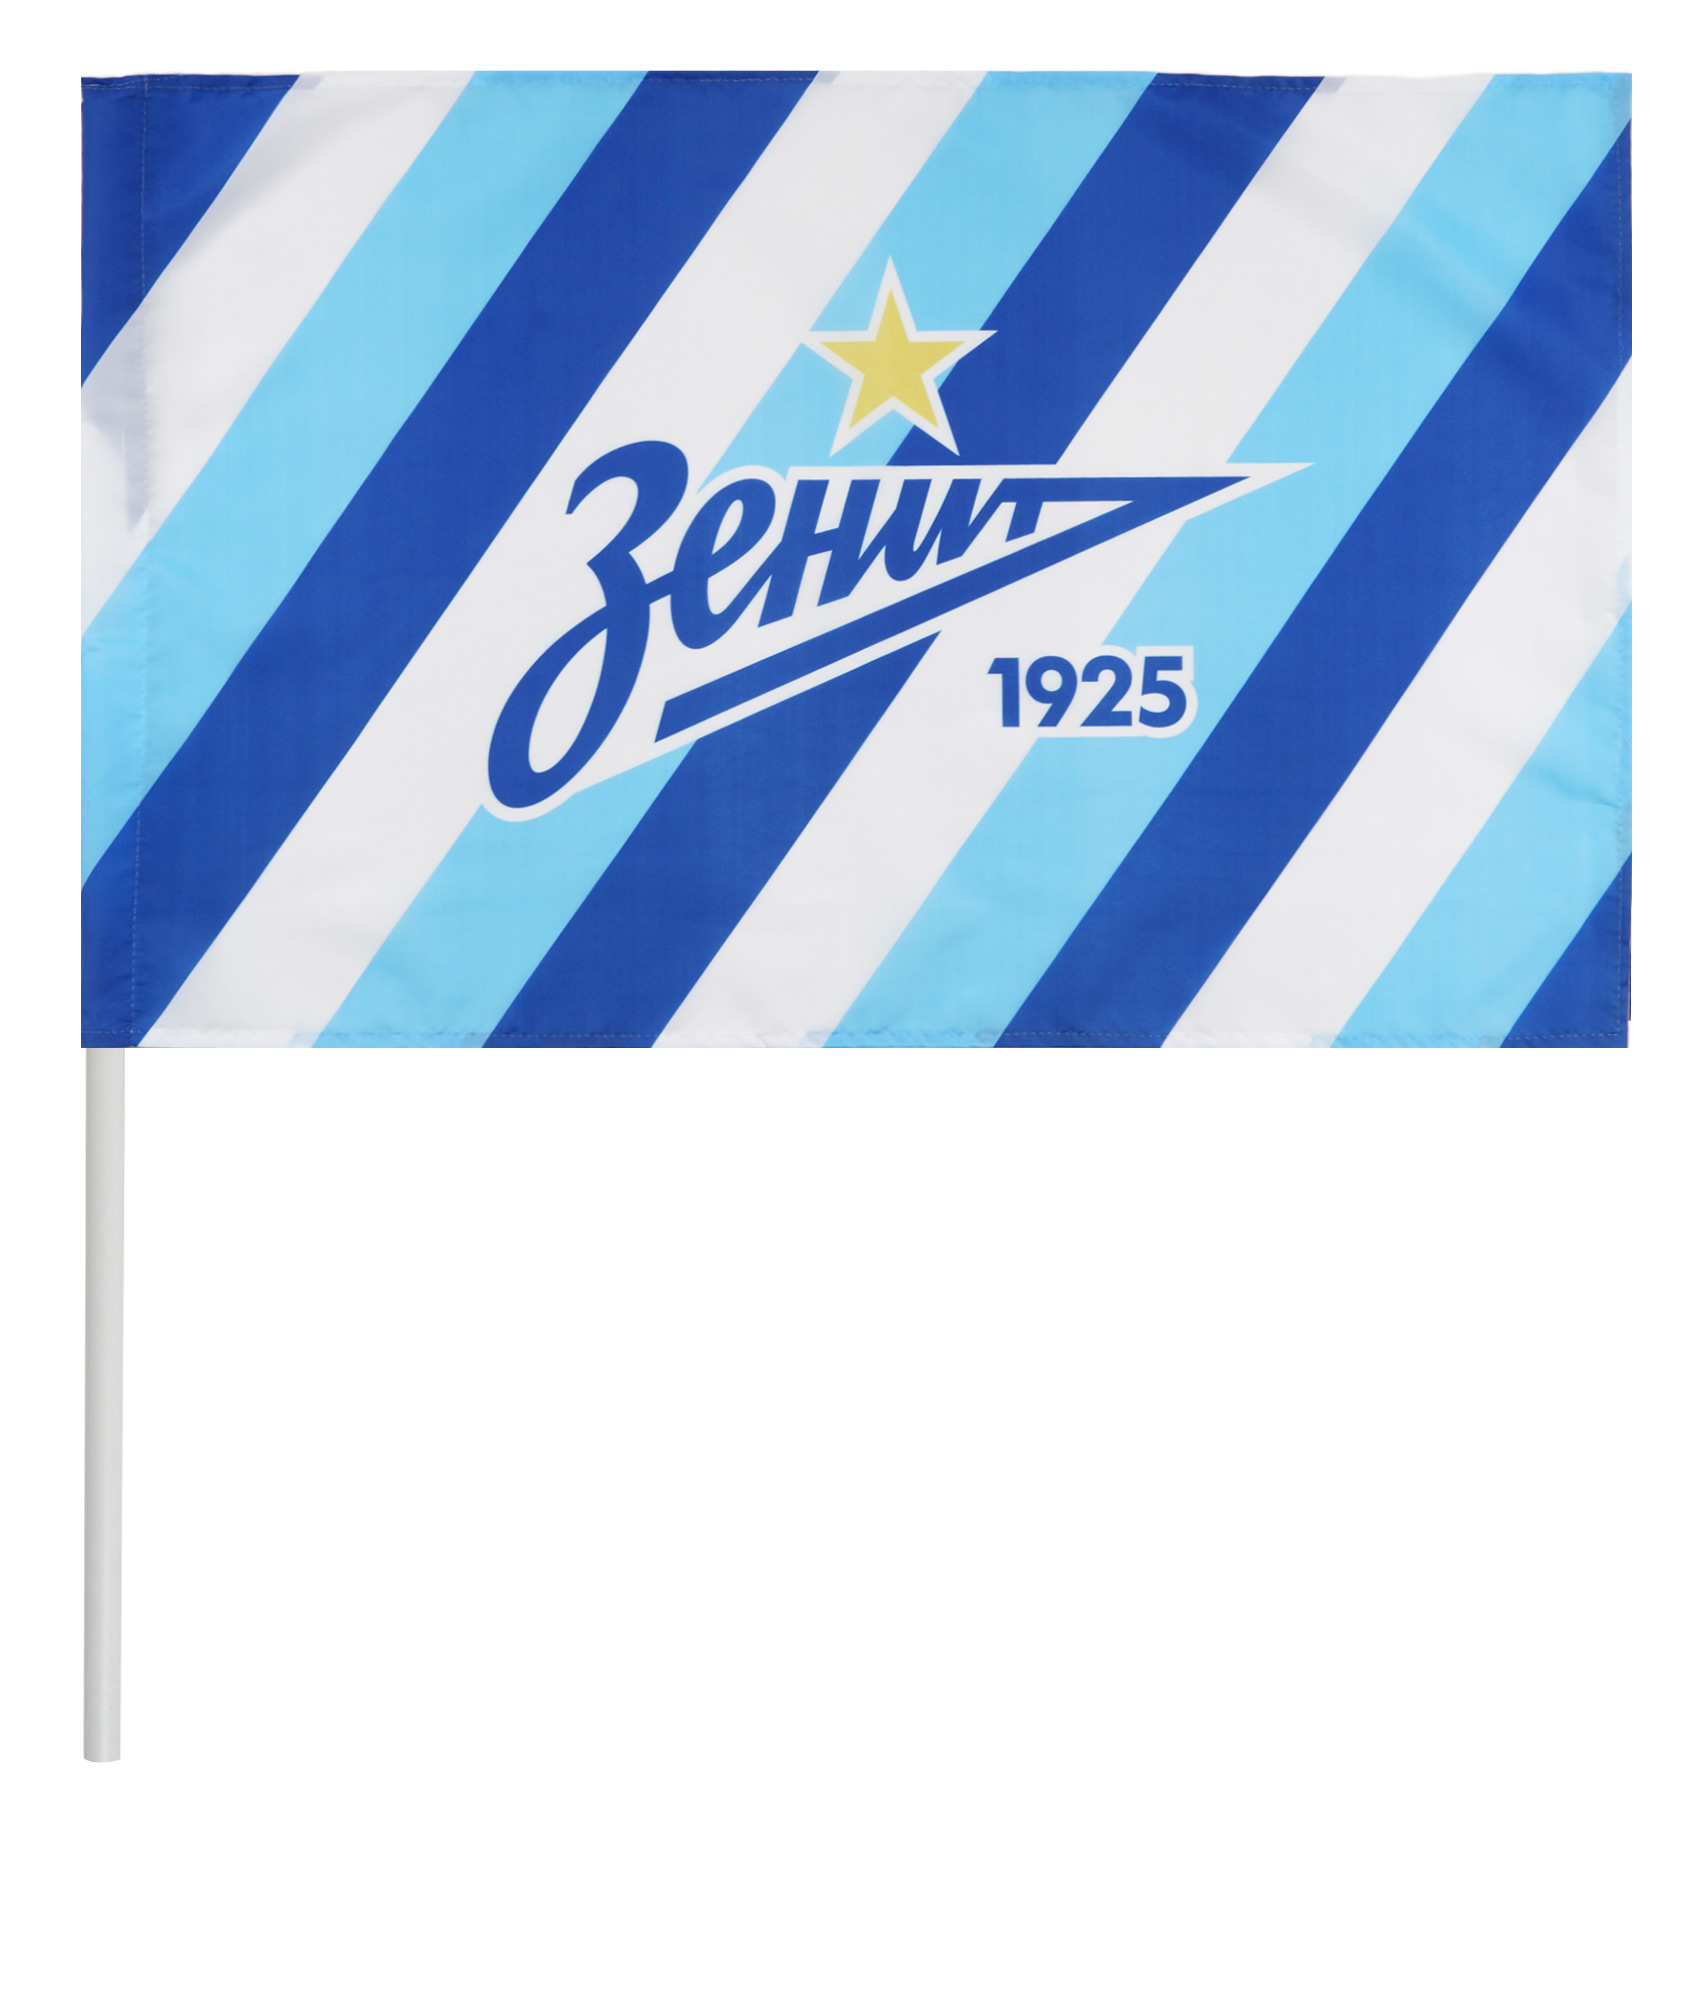 флаг зенита футбольного клуба